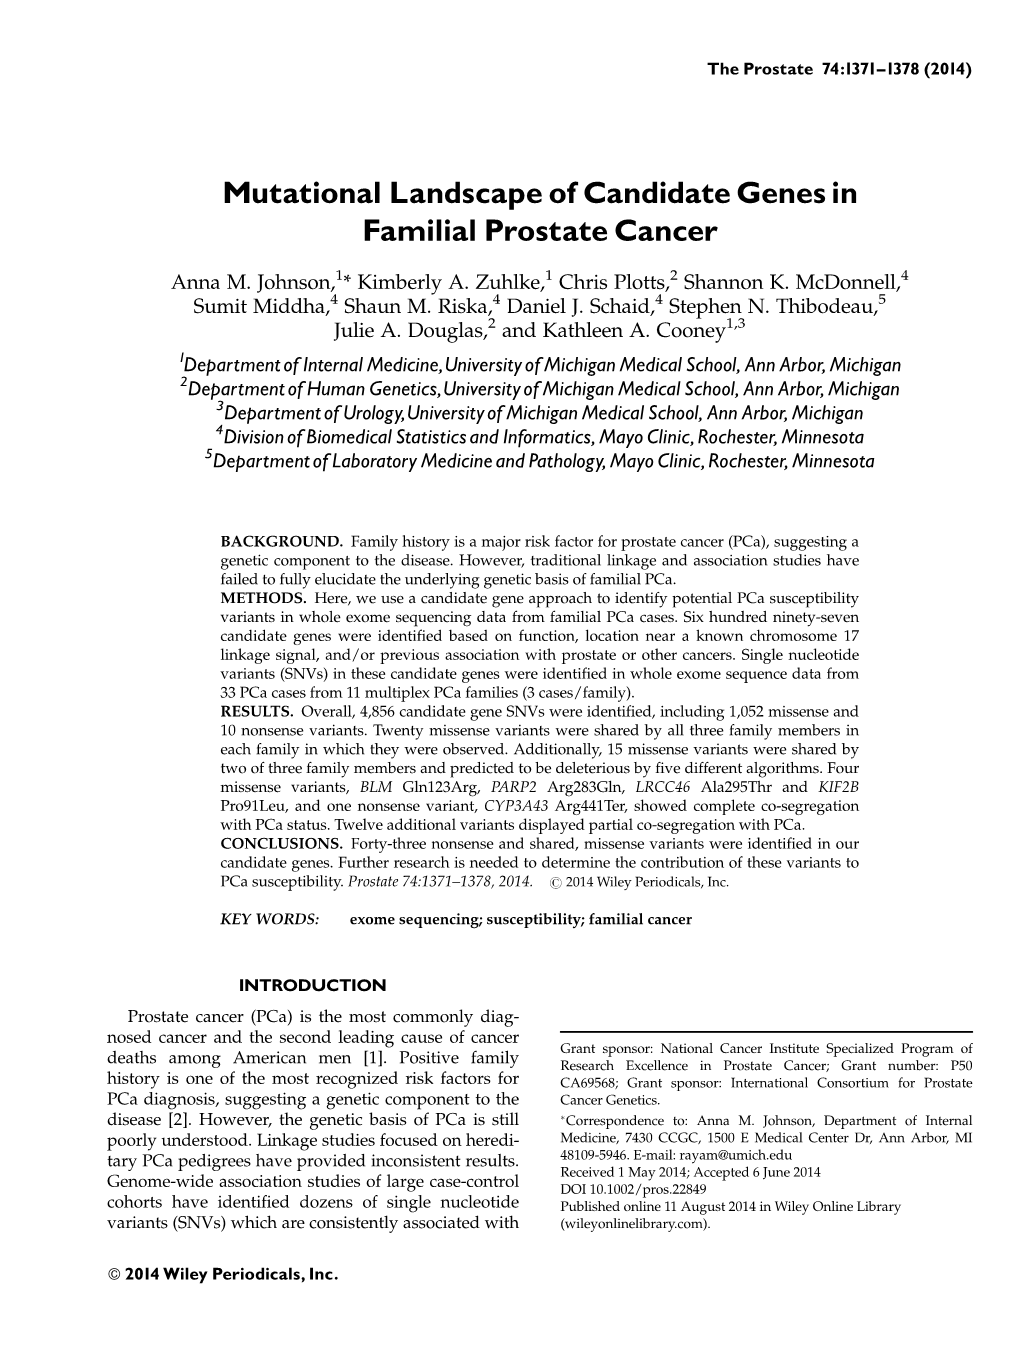 Mutational Landscape of Candidate Genes in Familial Prostate Cancer